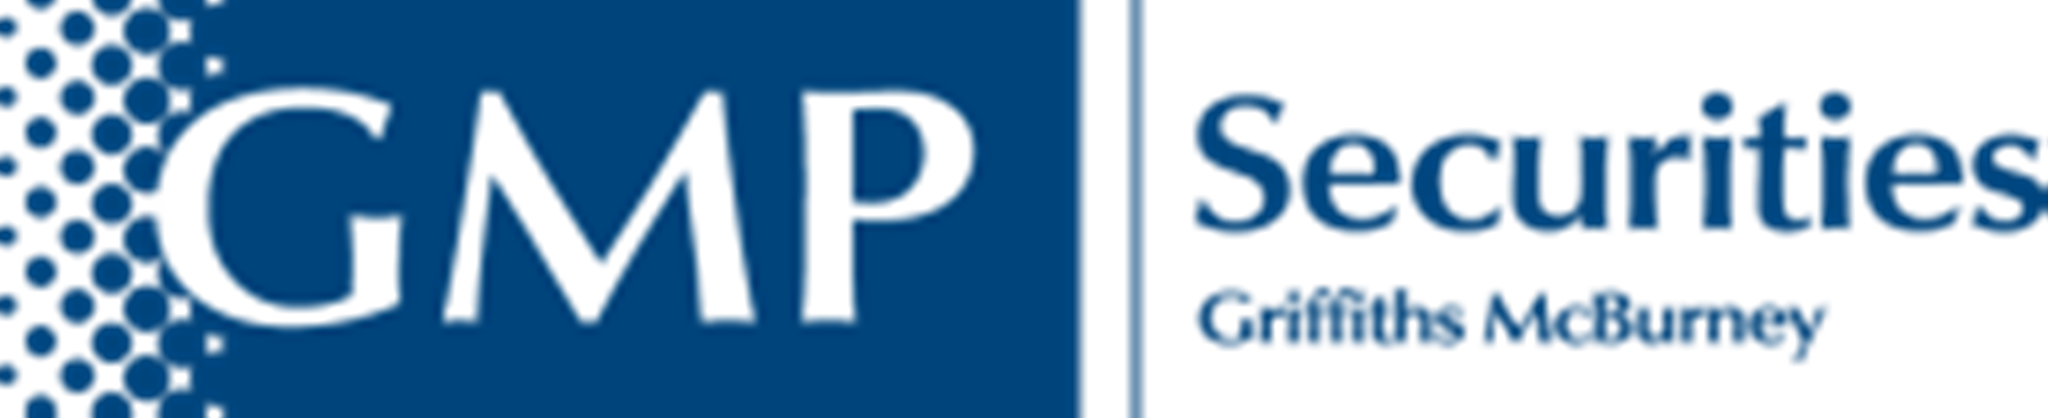 GMP Logo Free PNG Image